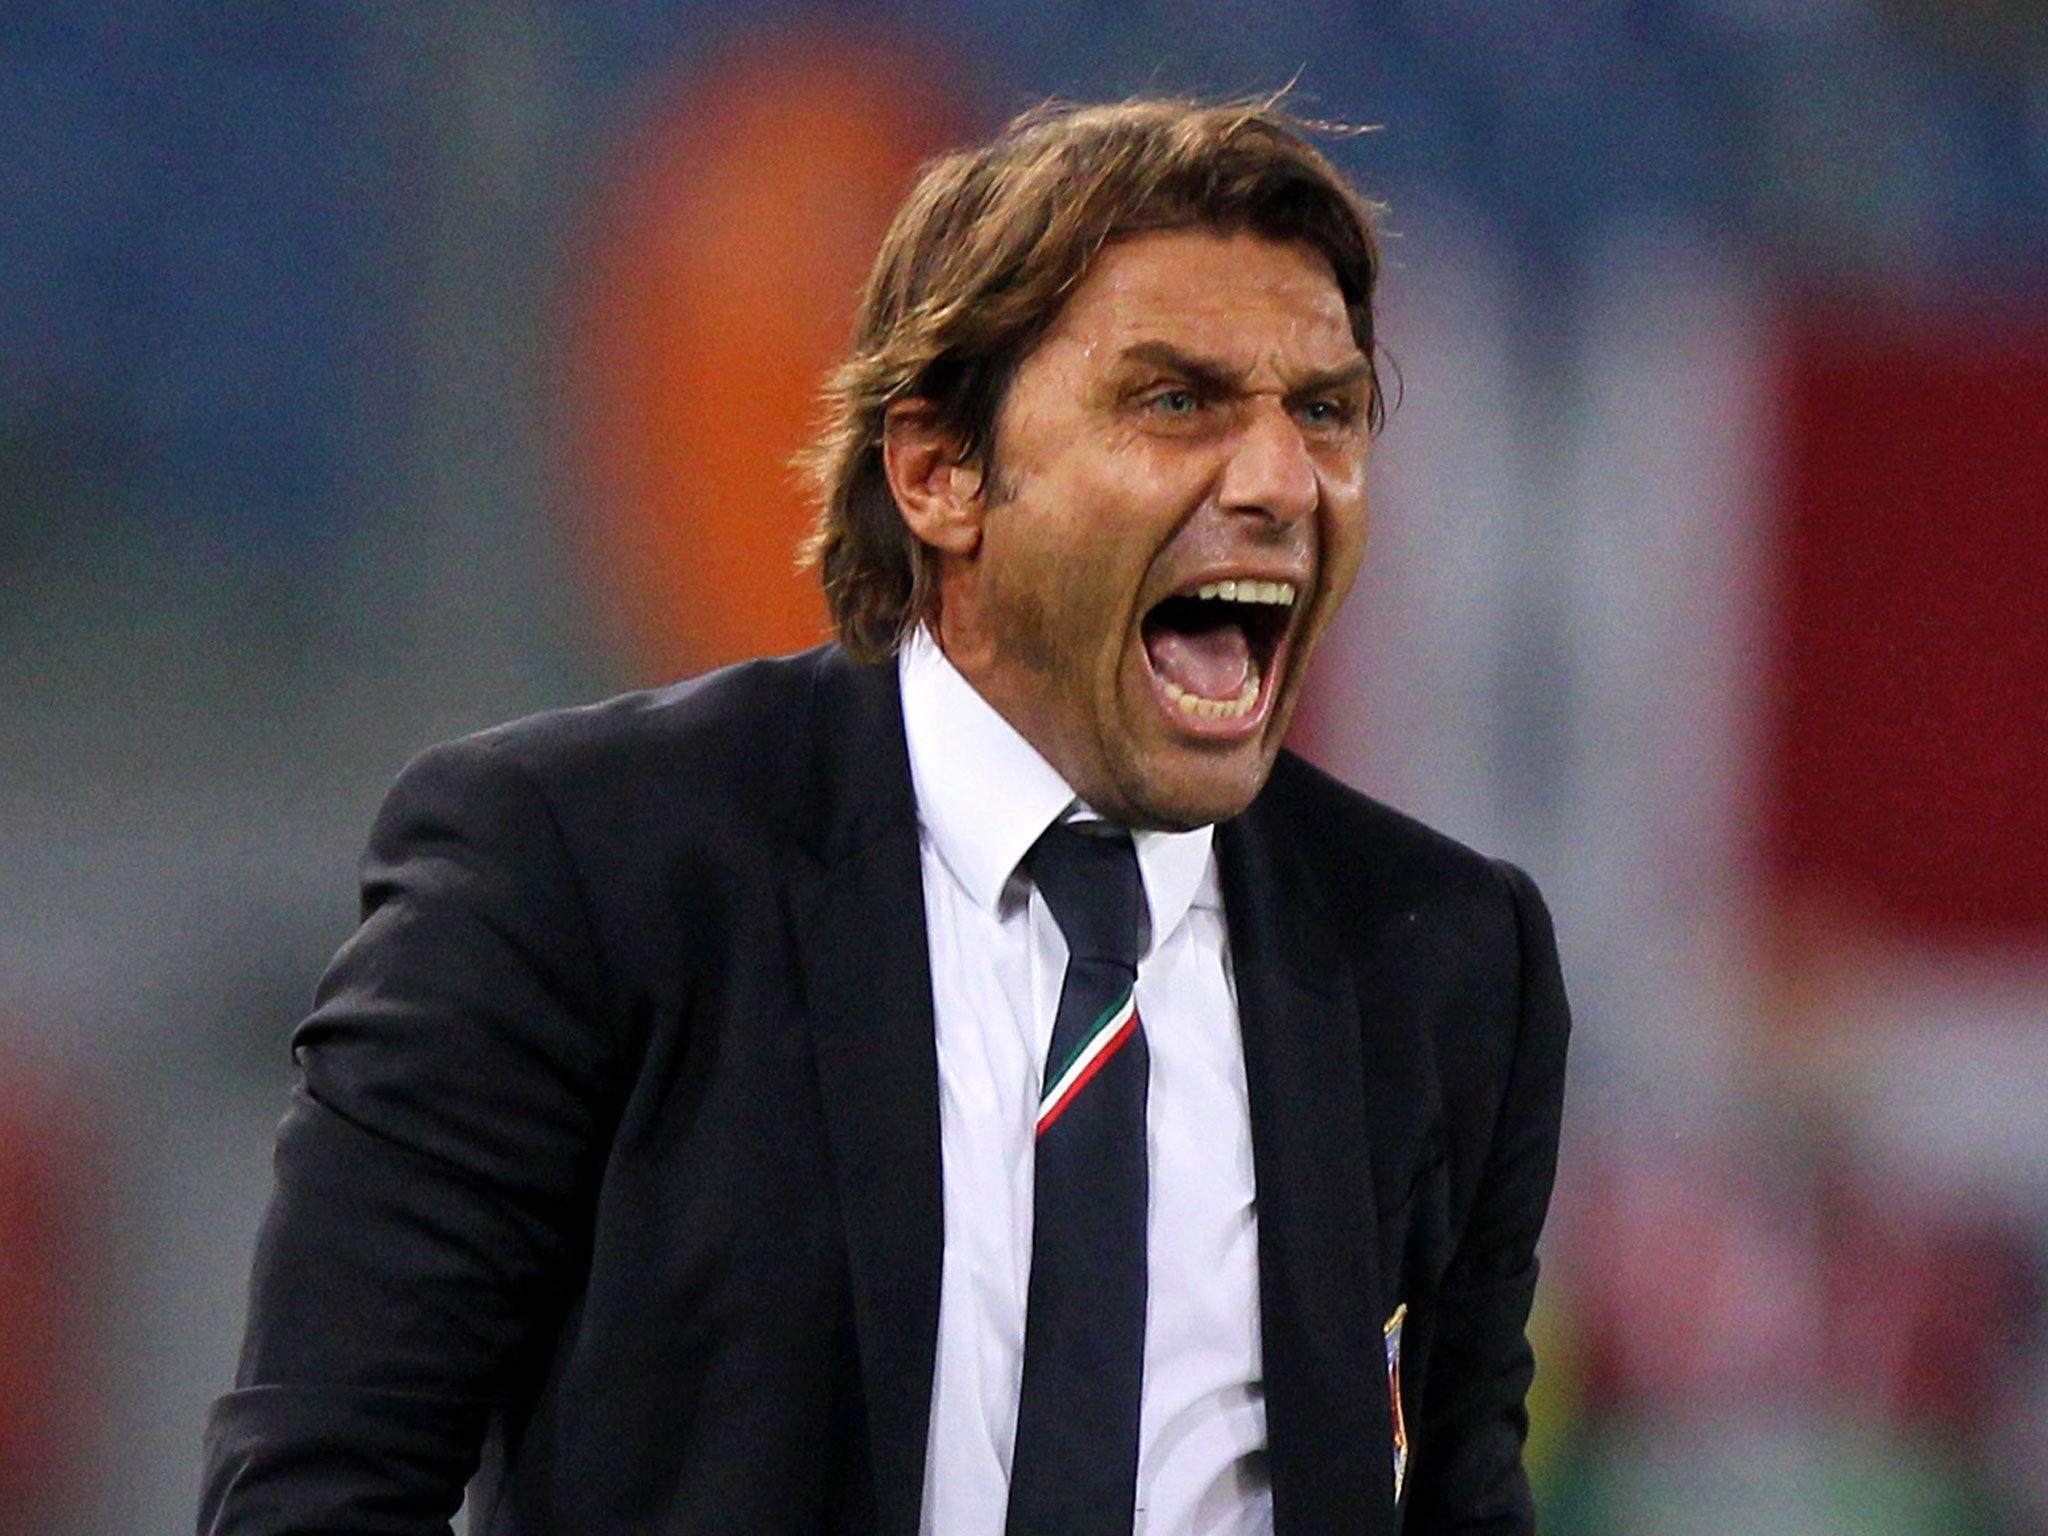 Antonio Conte appointment at Chelsea 'makes no sense', says Chris